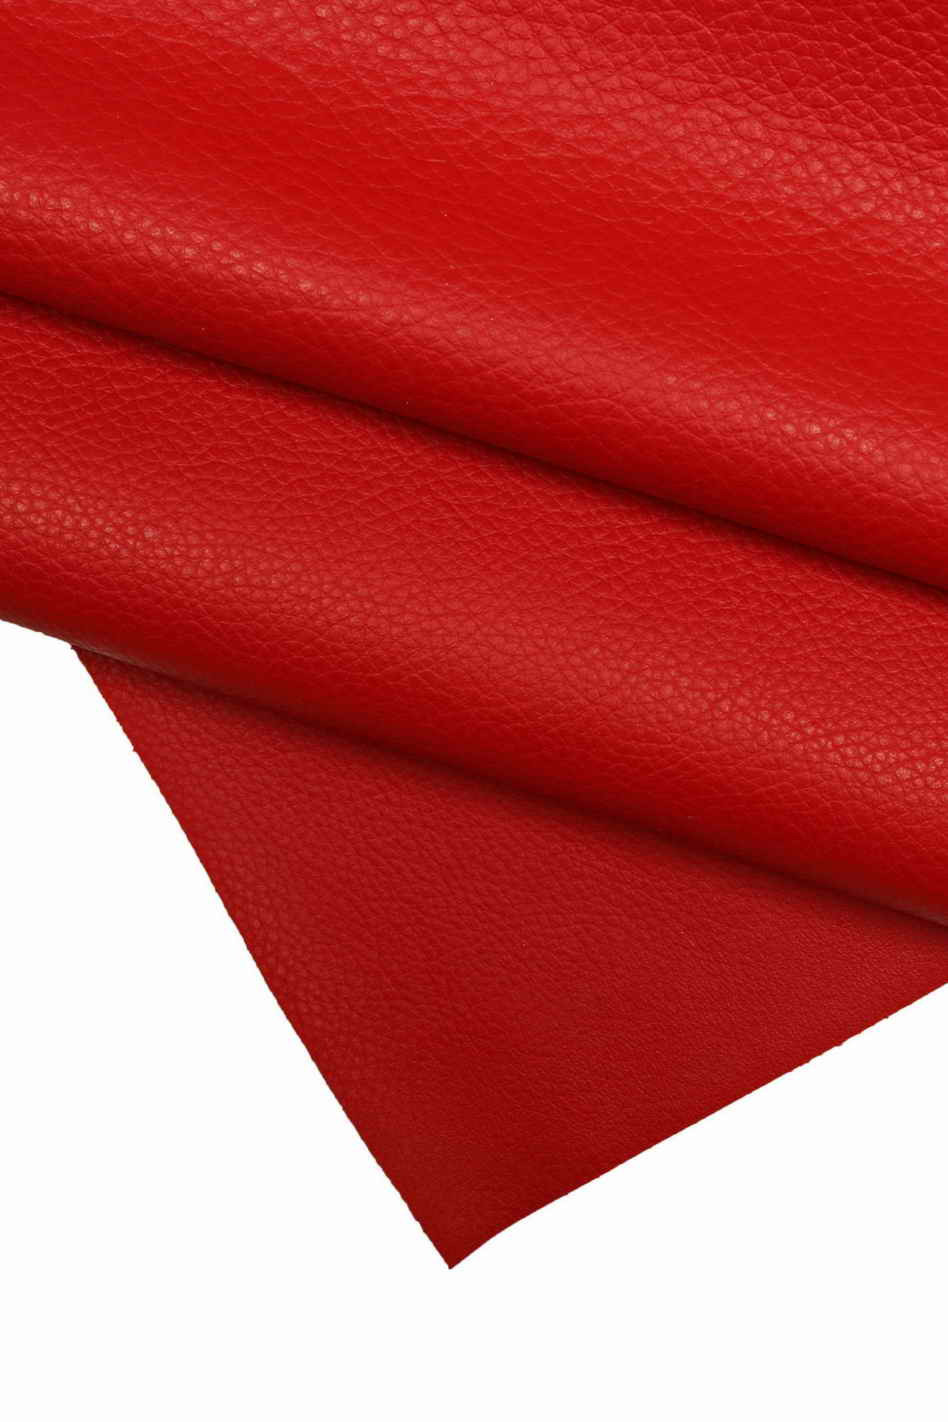 Minore Red Metallic, 10 Yards, 57 Roll of Cork Fabric - THE